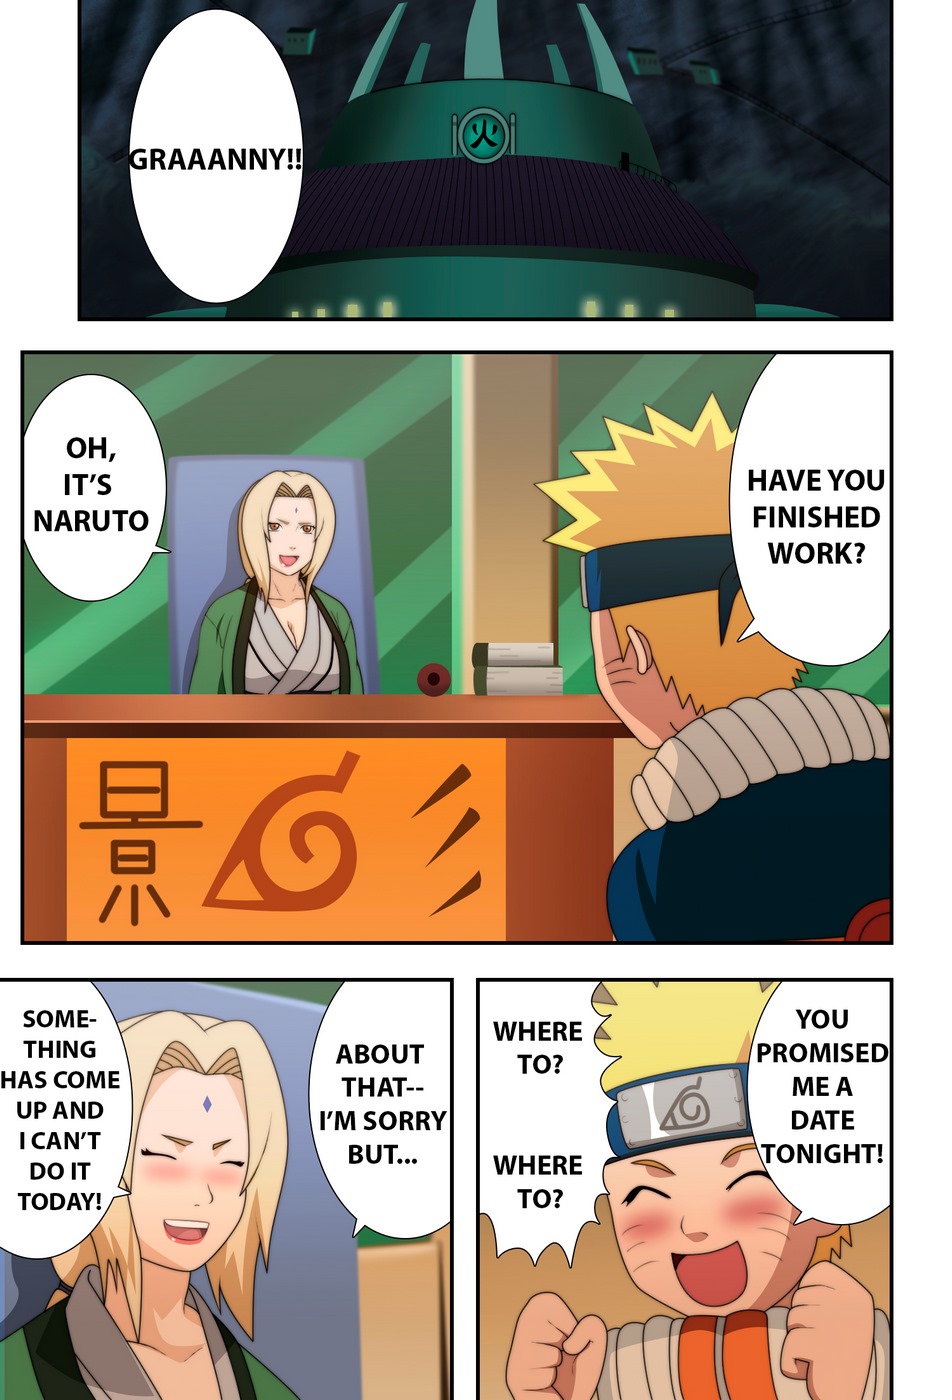 Naruto (naruho) chichikage duży piersi Ninja